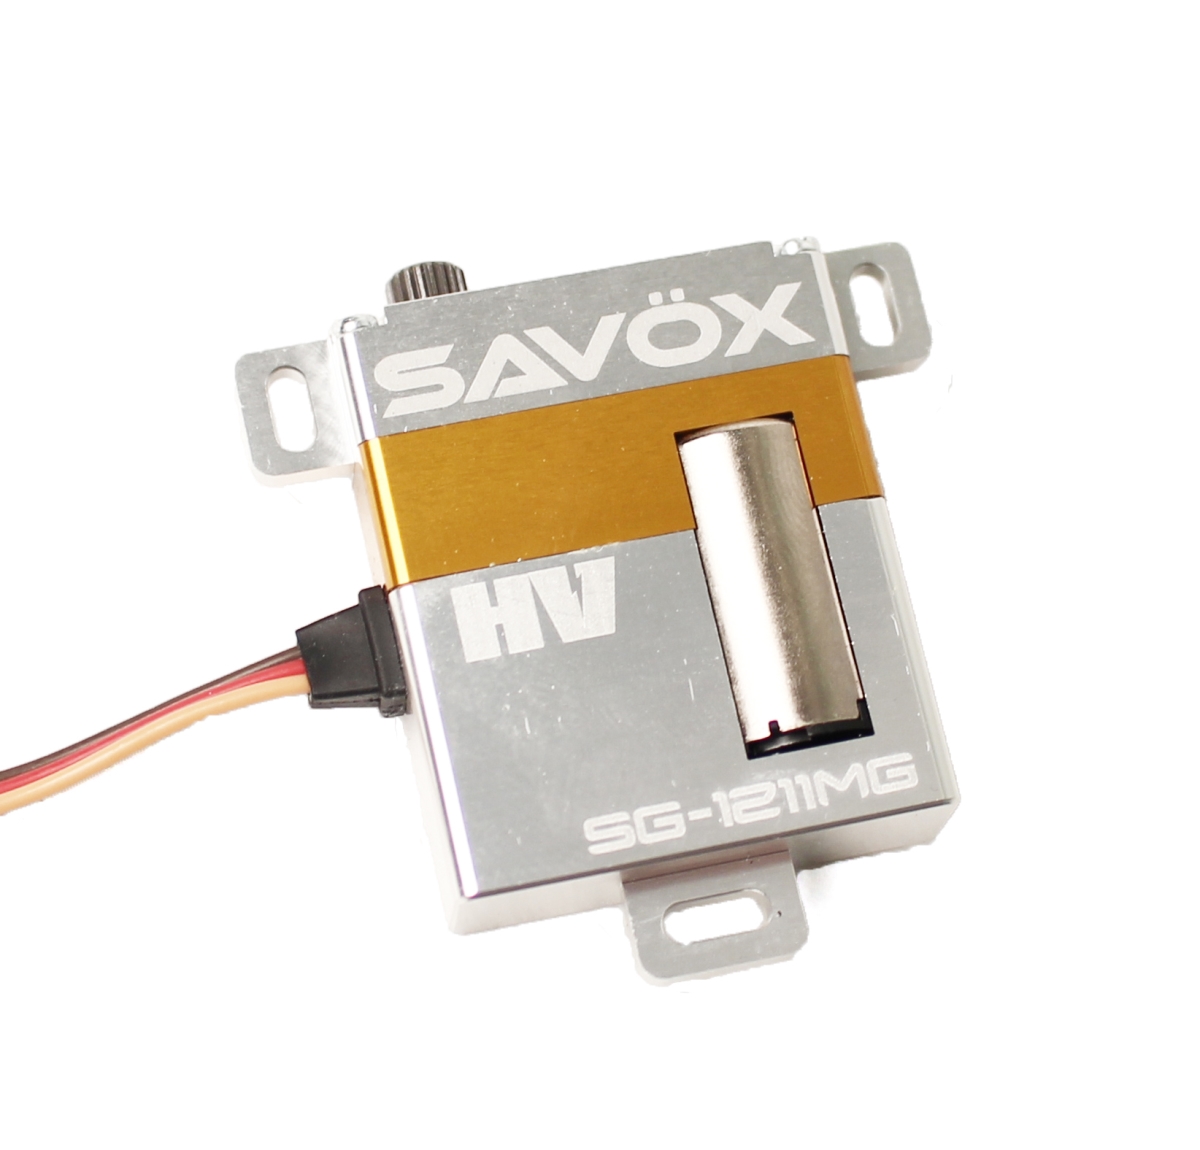 Savsg1211mg High Torque High Voltage Metal Case Digital Glider Servo